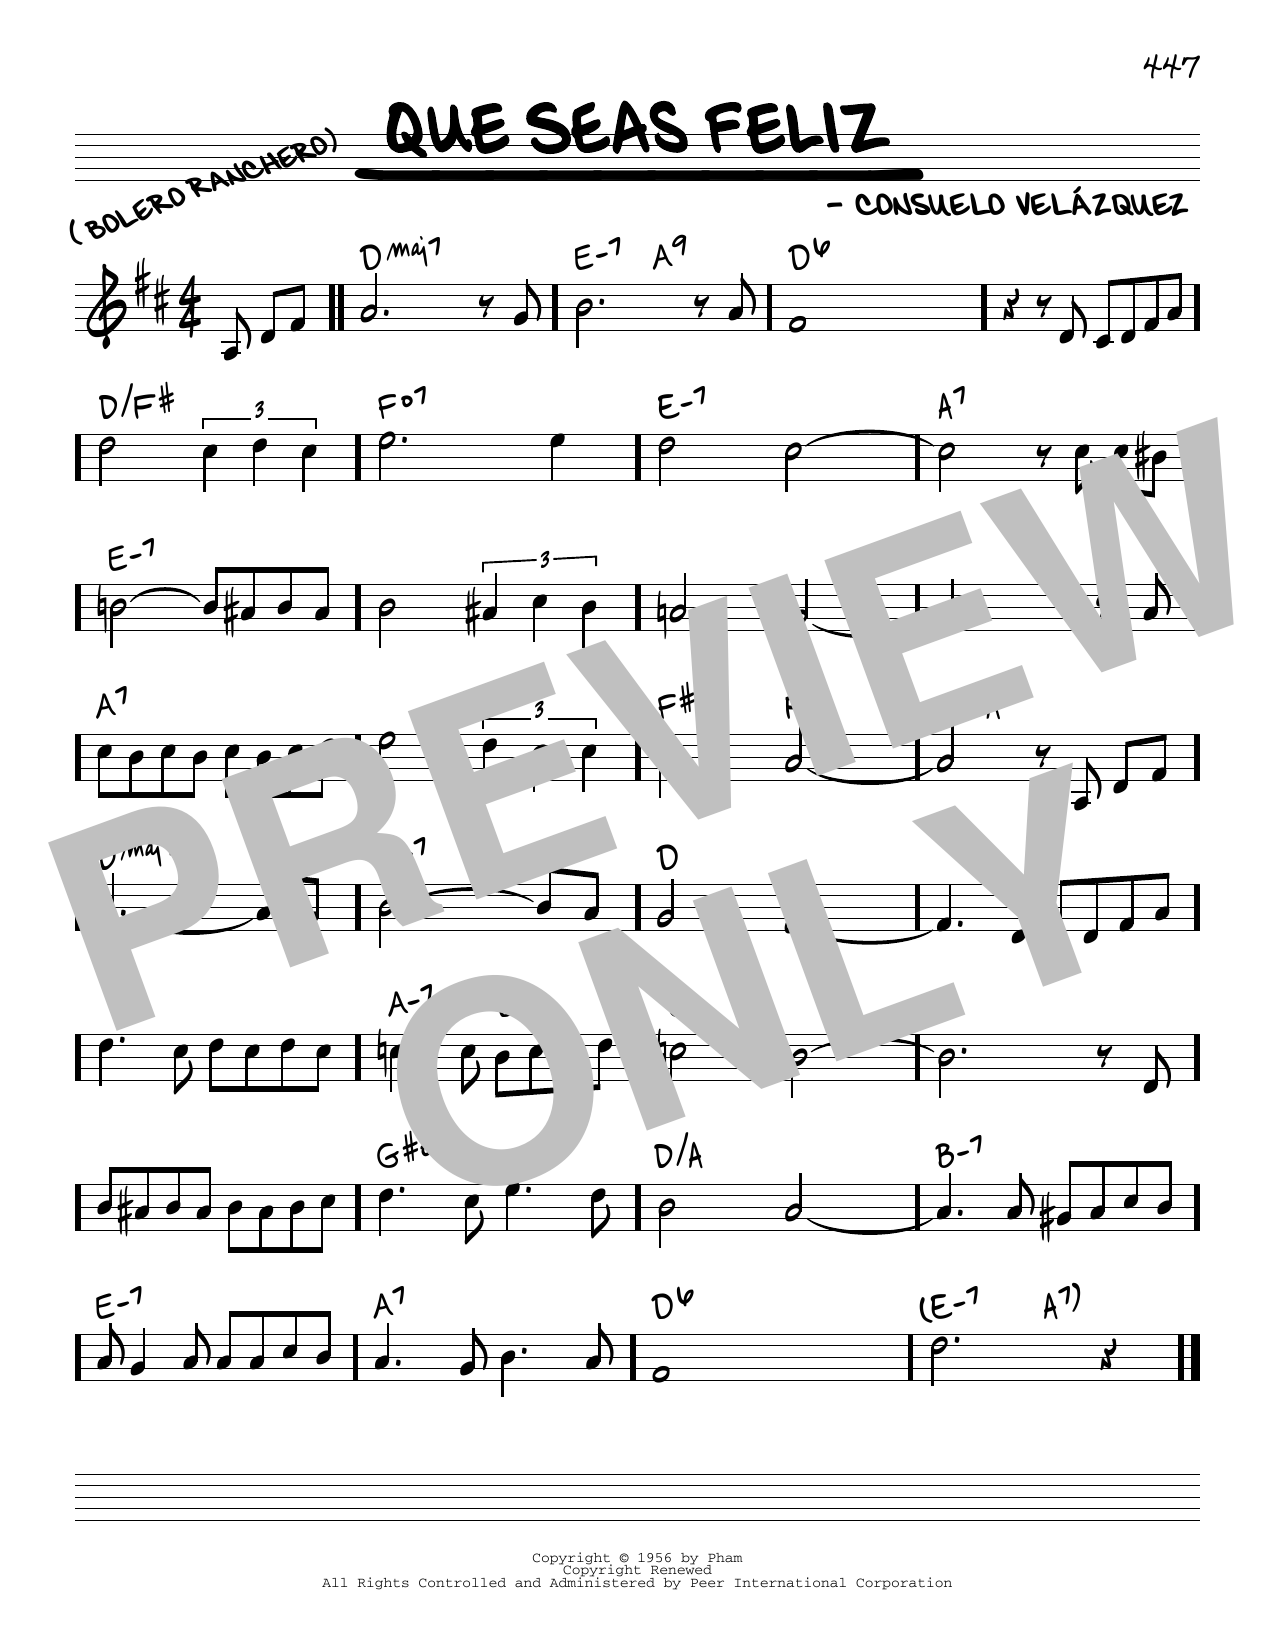 Consuelo Velazquez Que Seas Feliz Sheet Music Notes & Chords for Real Book – Melody & Chords - Download or Print PDF